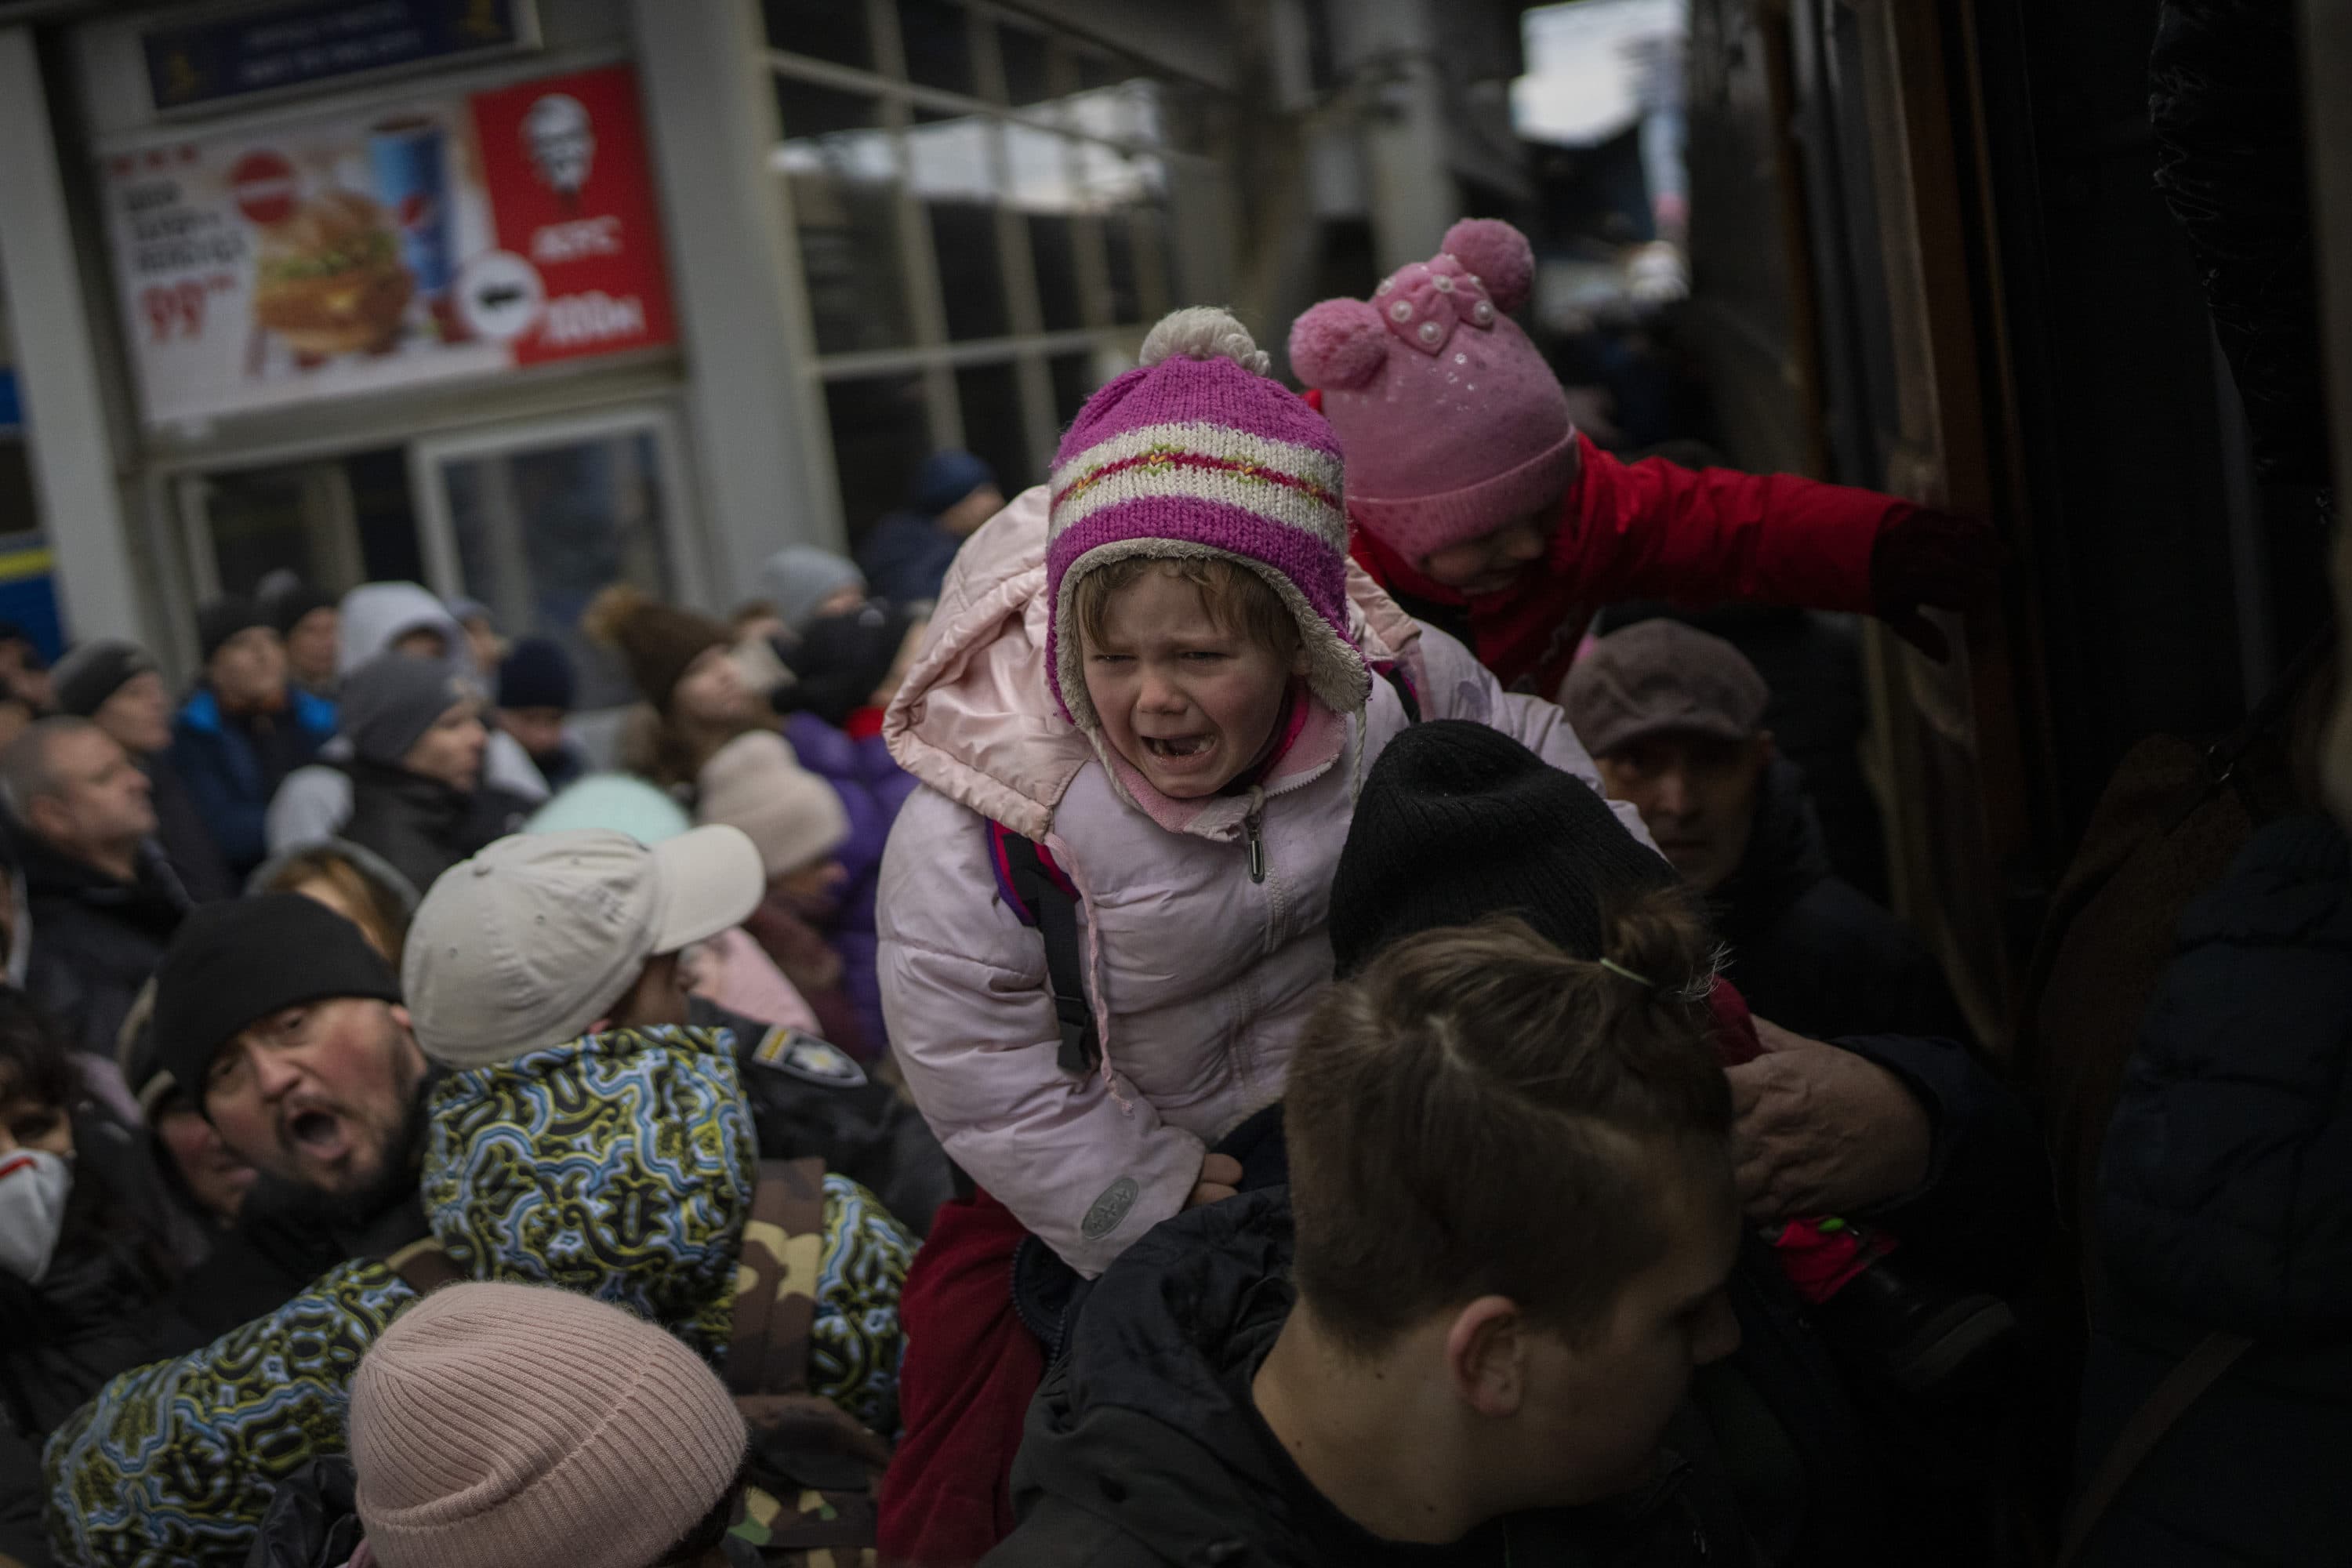 People holding their children struggle to get on a train to Lviv at the Kyiv station, Ukraine, Monday, March 7, 2022. (Emilio Morenatti/AP)